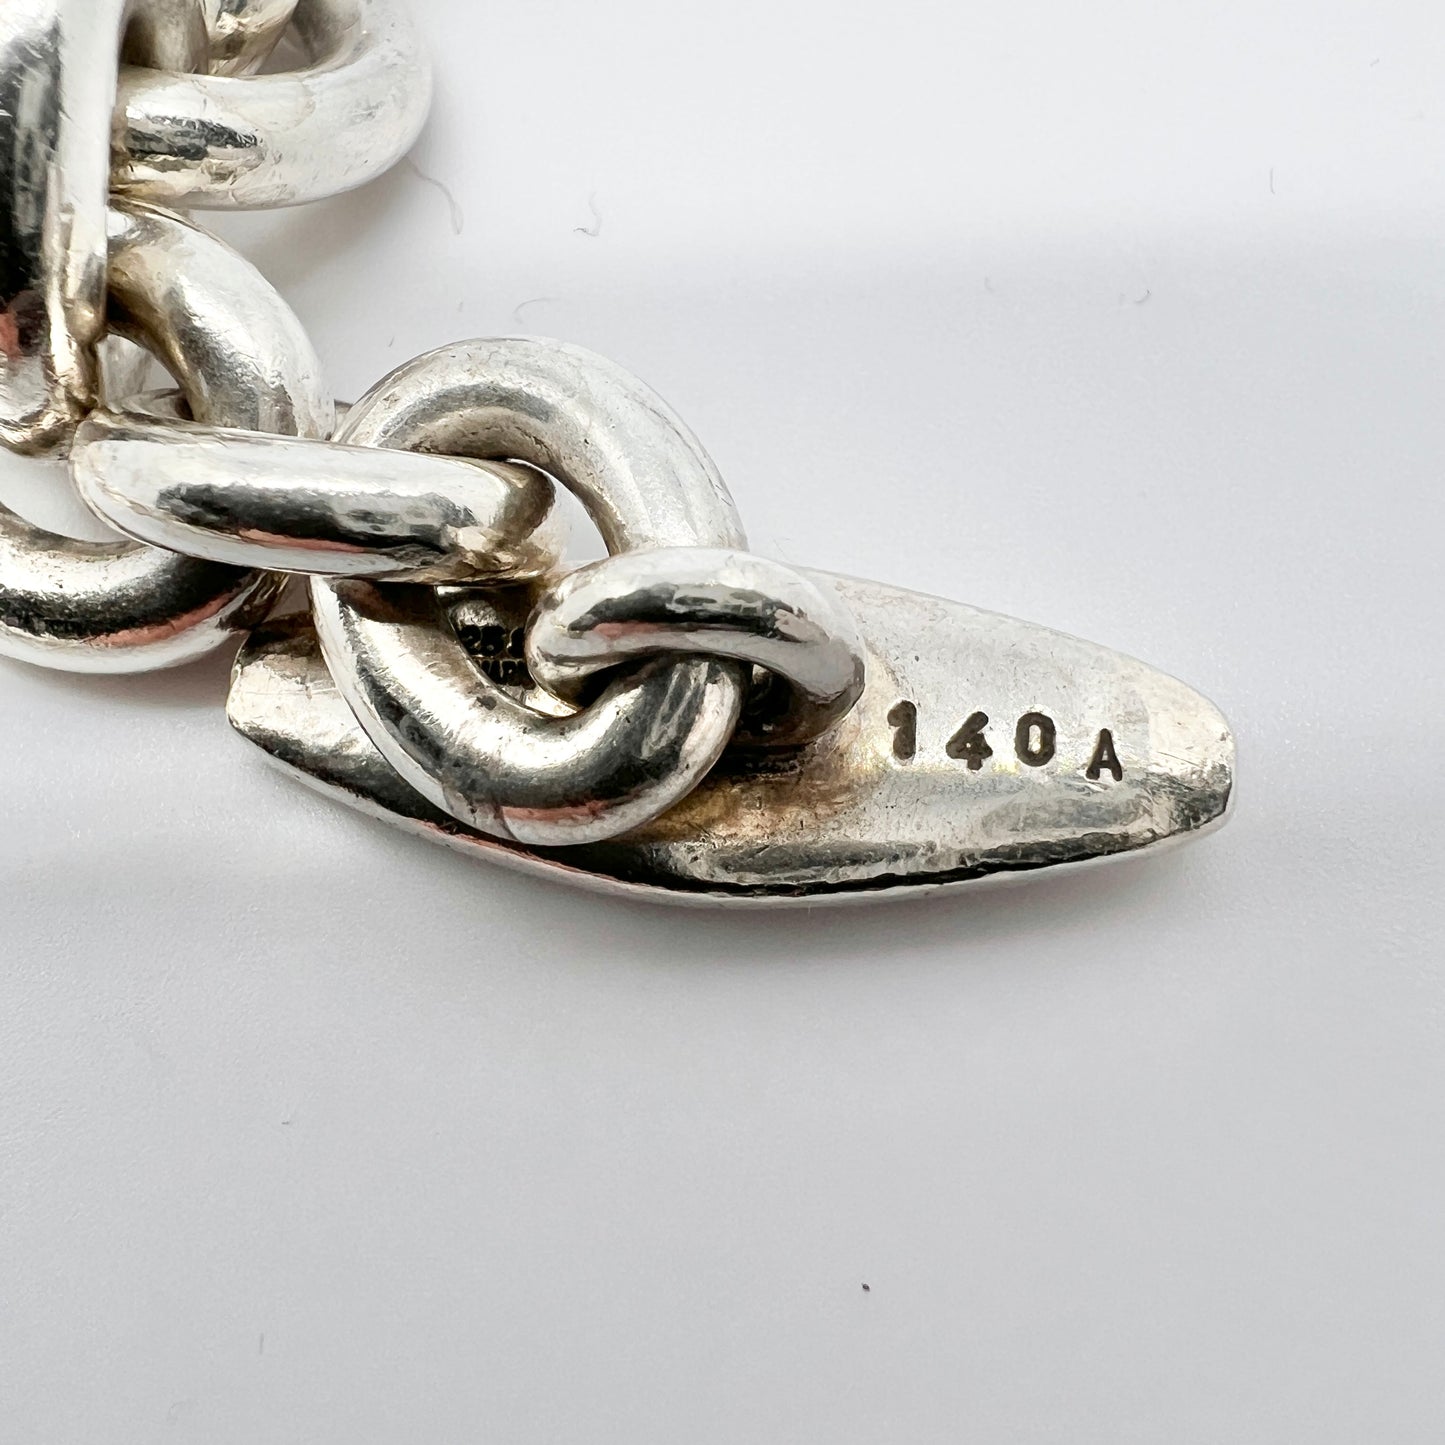 Georg Jensen, Denmark. Vintage Chunky Sterling Silver Bracelet. Design 140A by Nanna Ditzel.